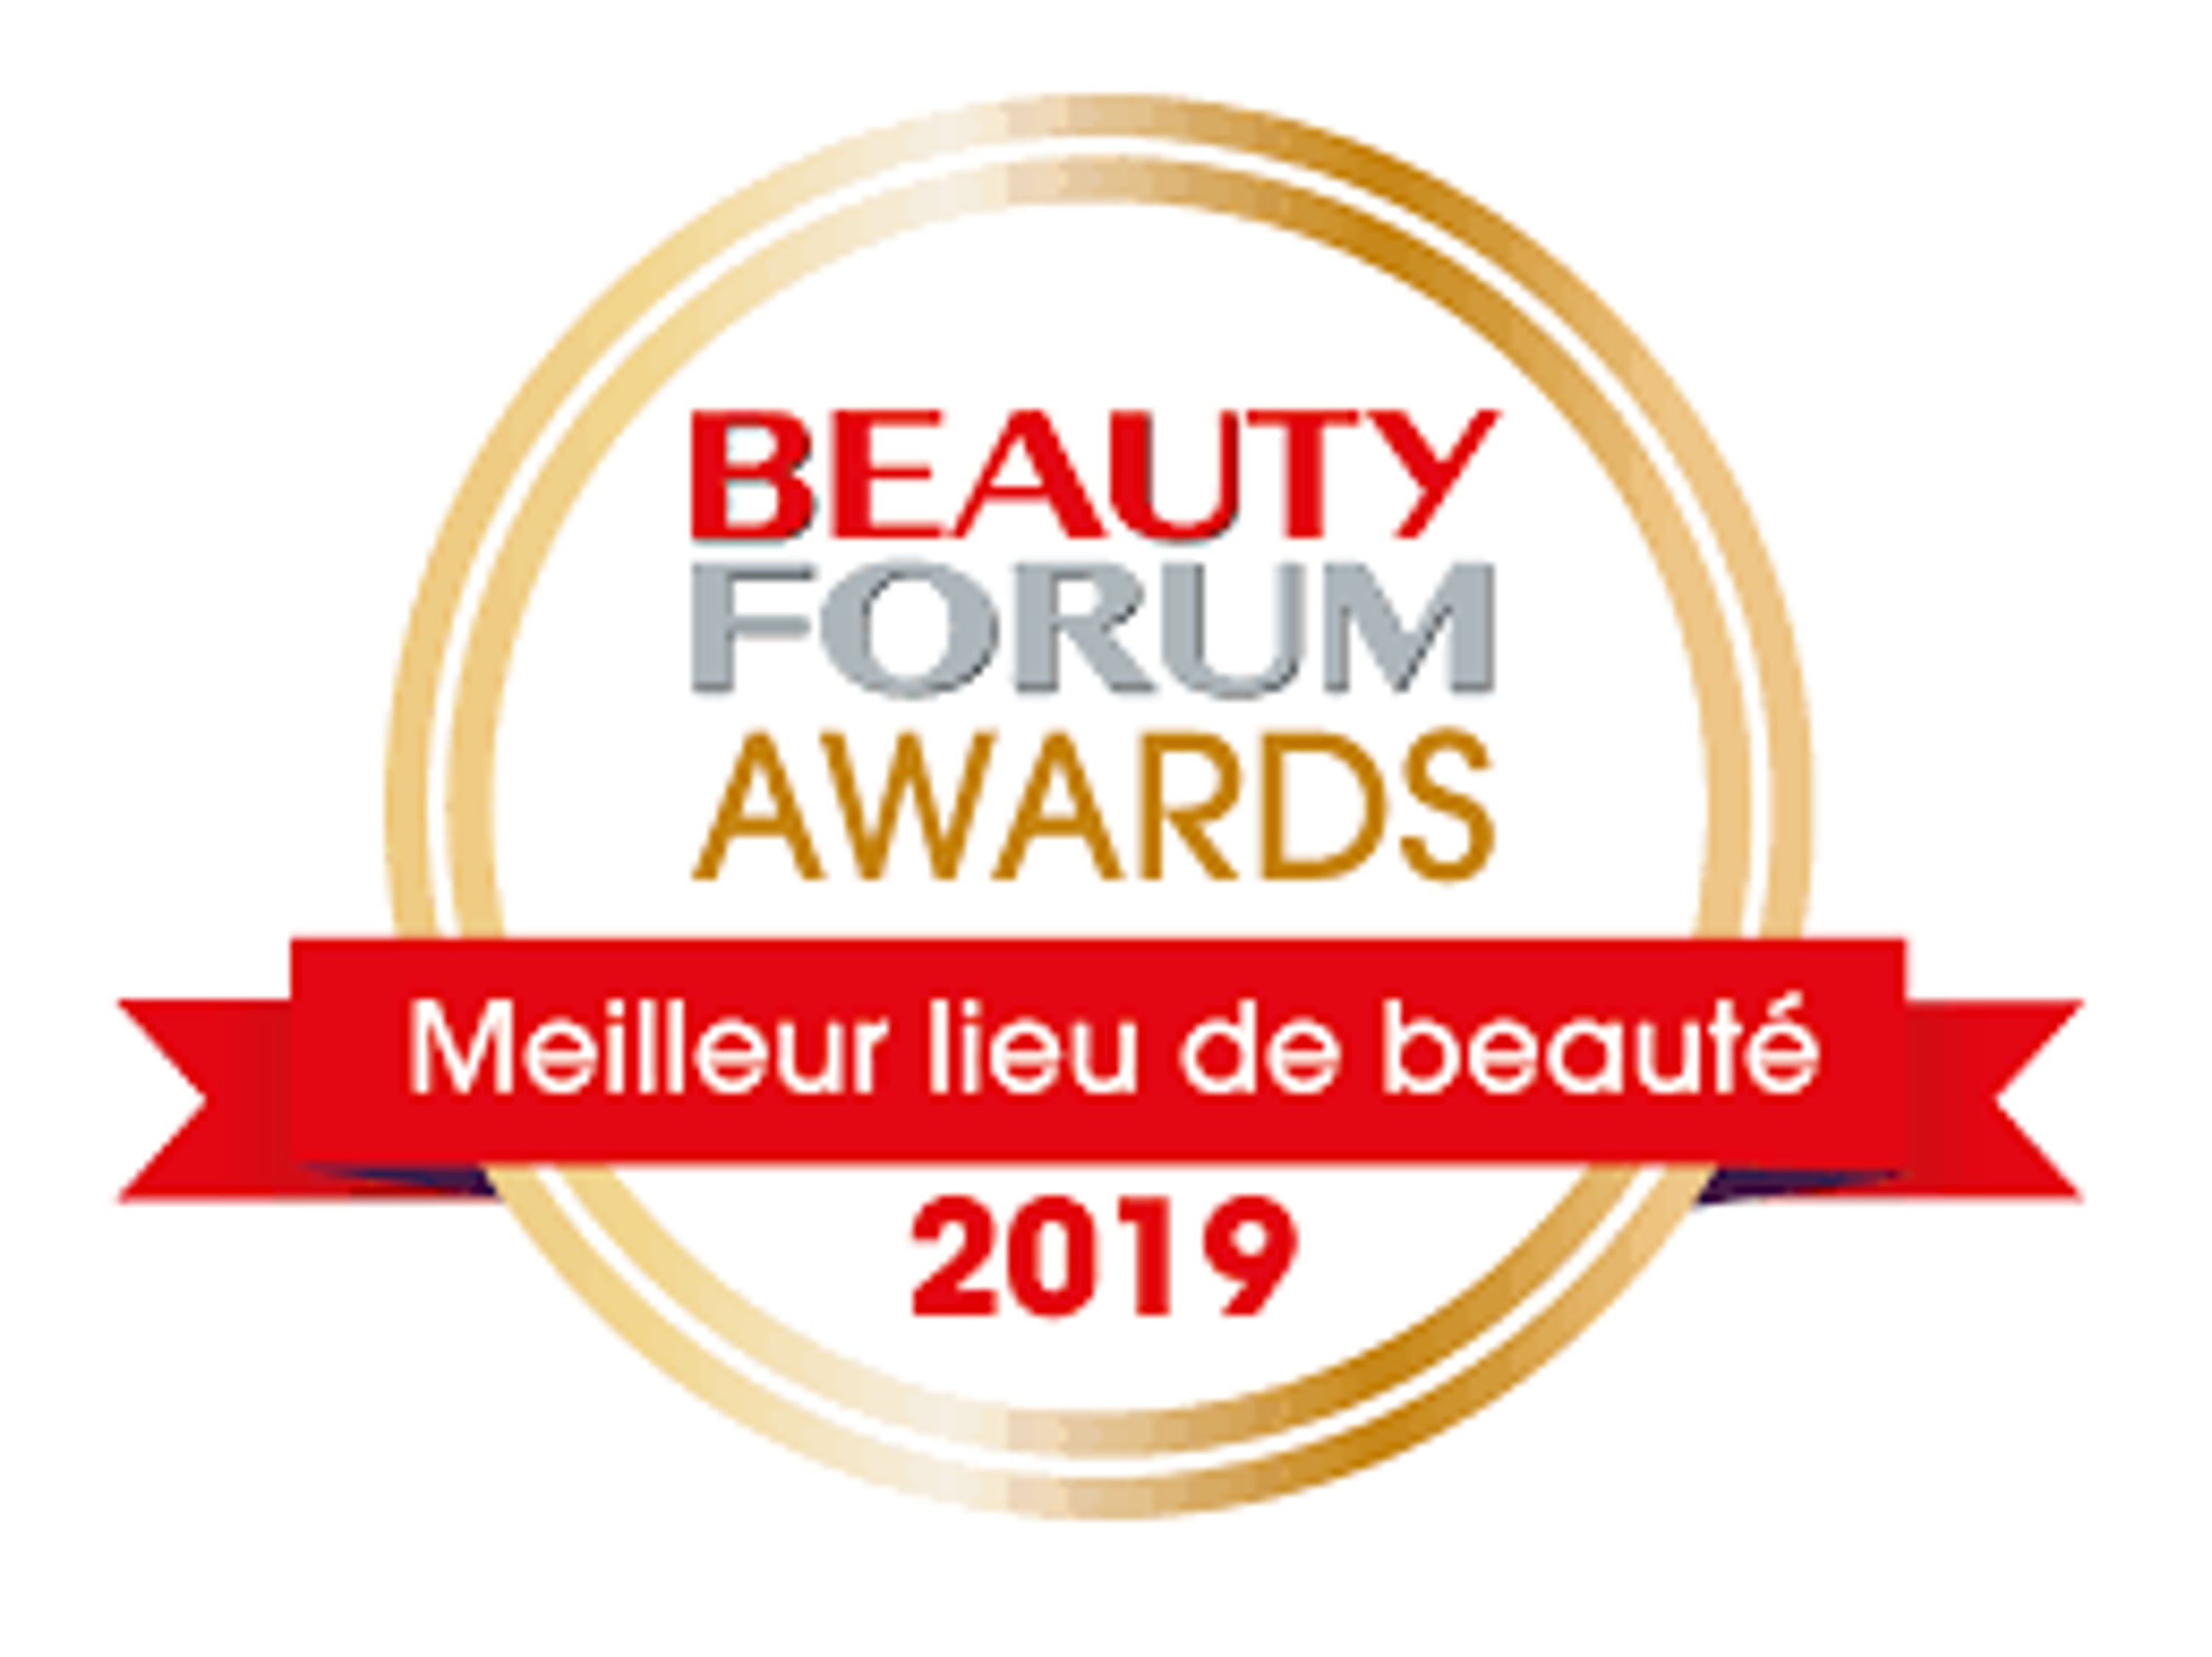 Beauty forum Awards